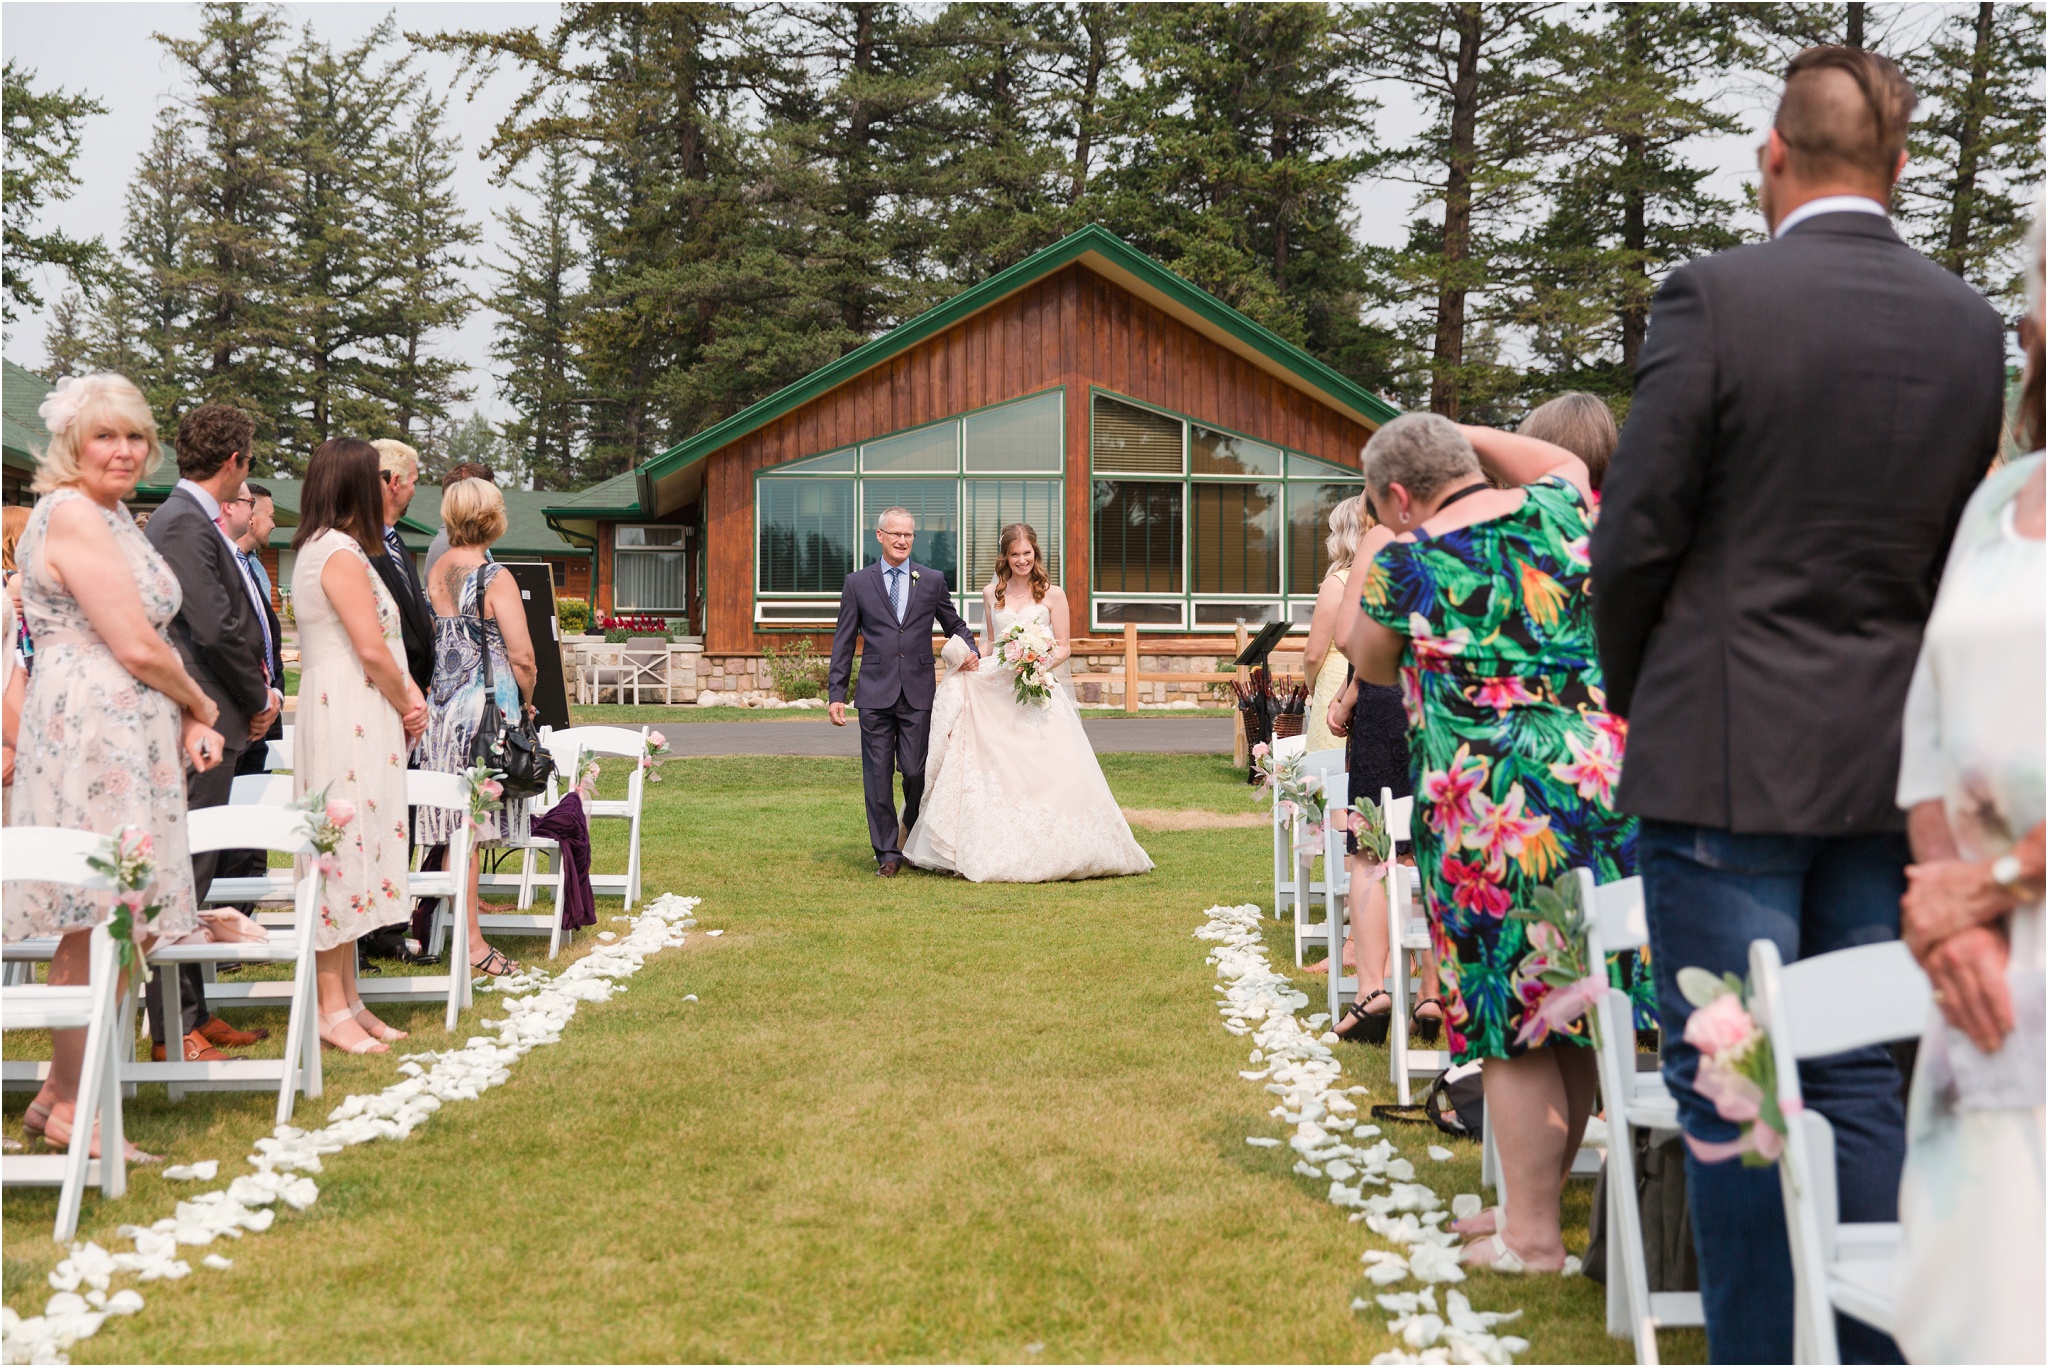 Jasper Park Lodge Wedding Photos edmonton photographer nc photography